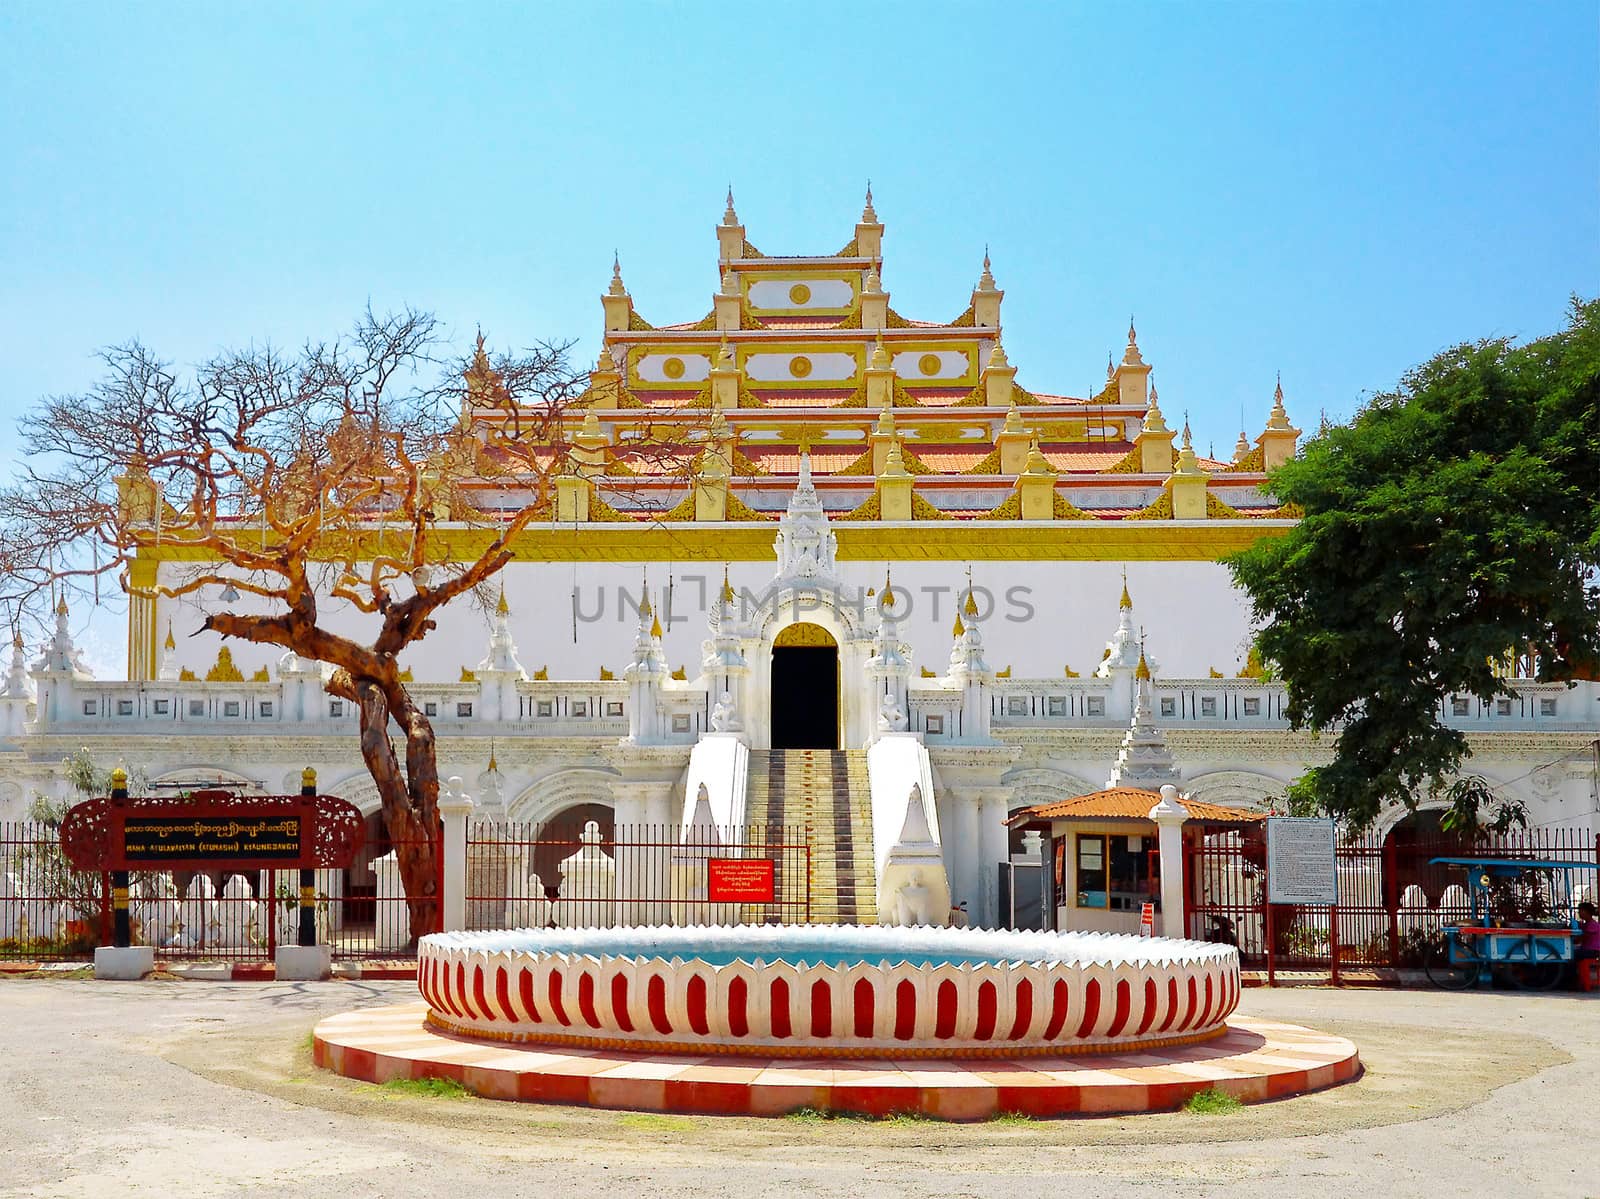 Atumashi Monastery (Maha Atulaveyan Kyaungdawgyi), Buddhist monastery located in Mandalay, Myanmar. The Monastery was built in 1857 by King Mindon.